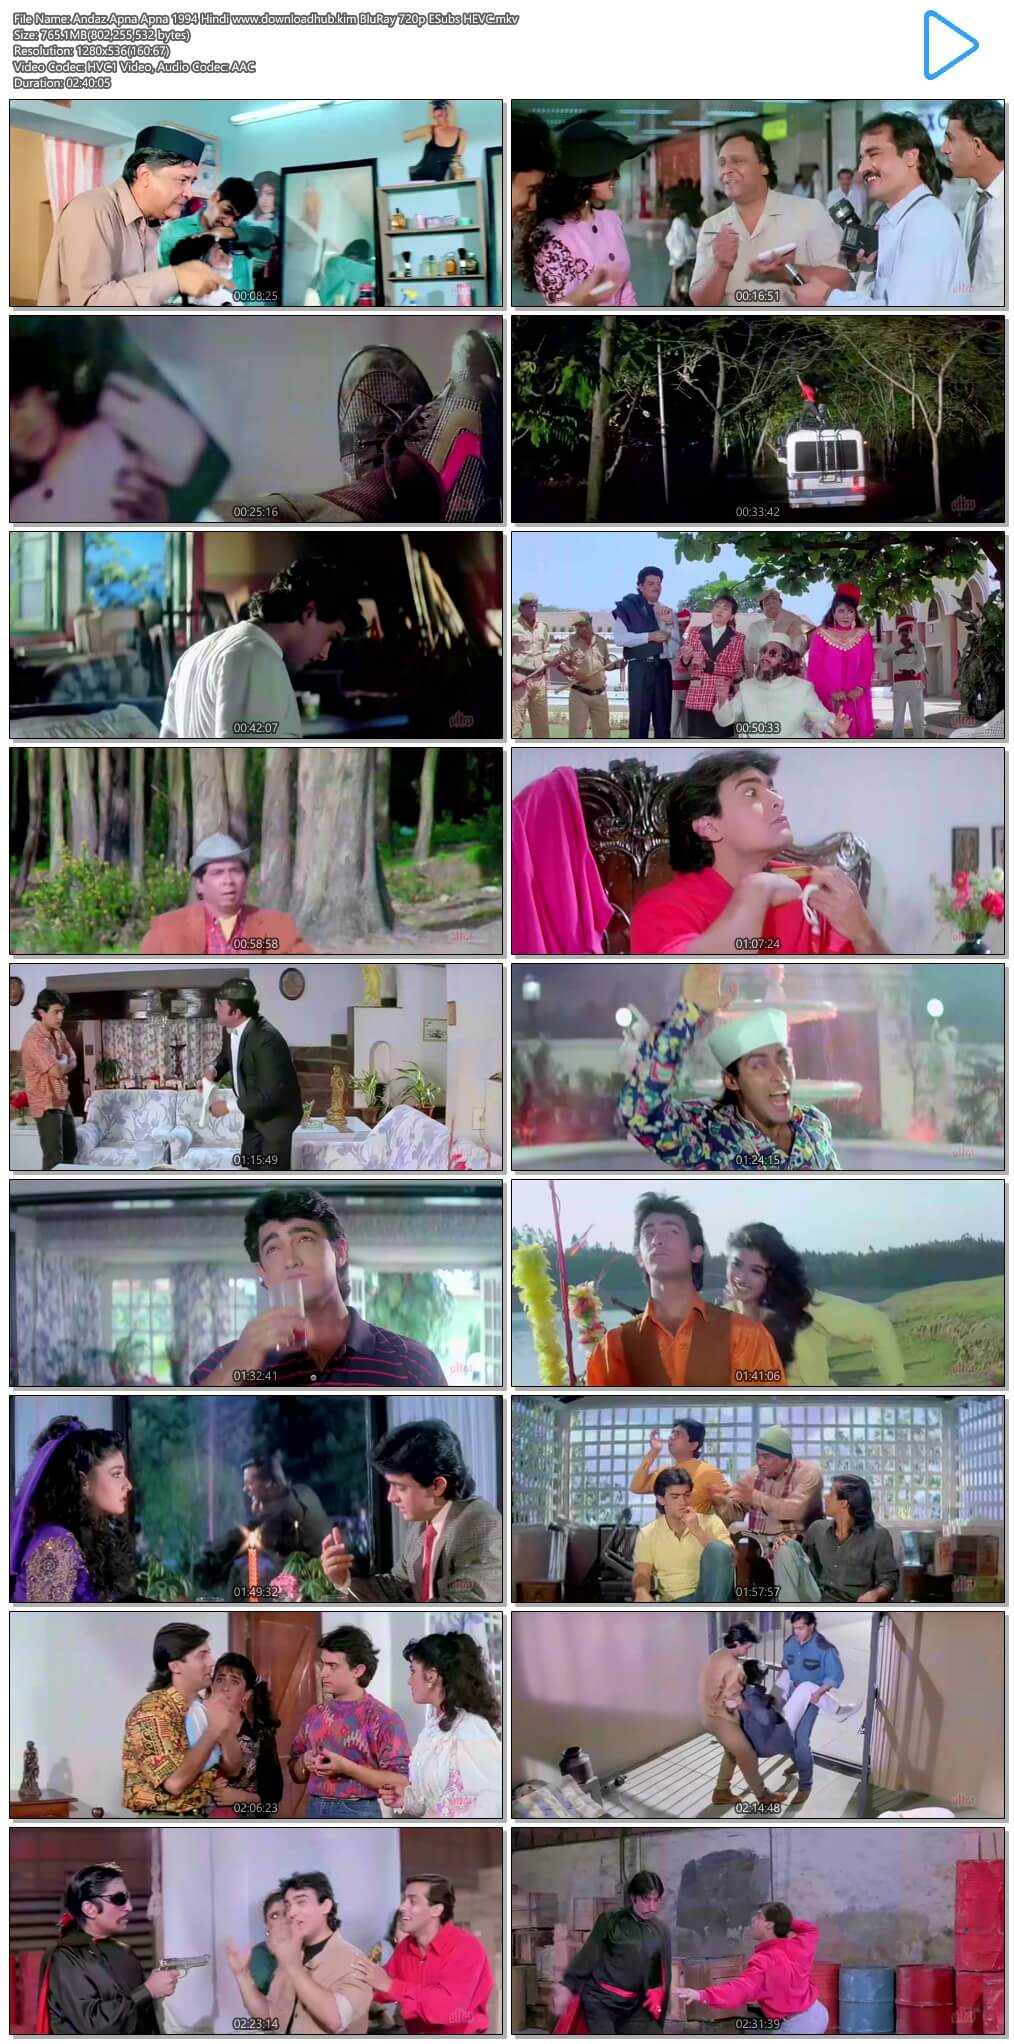 Andaz Apna Apna 1994 Hindi 750MB BluRay 720p ESubs HEVC